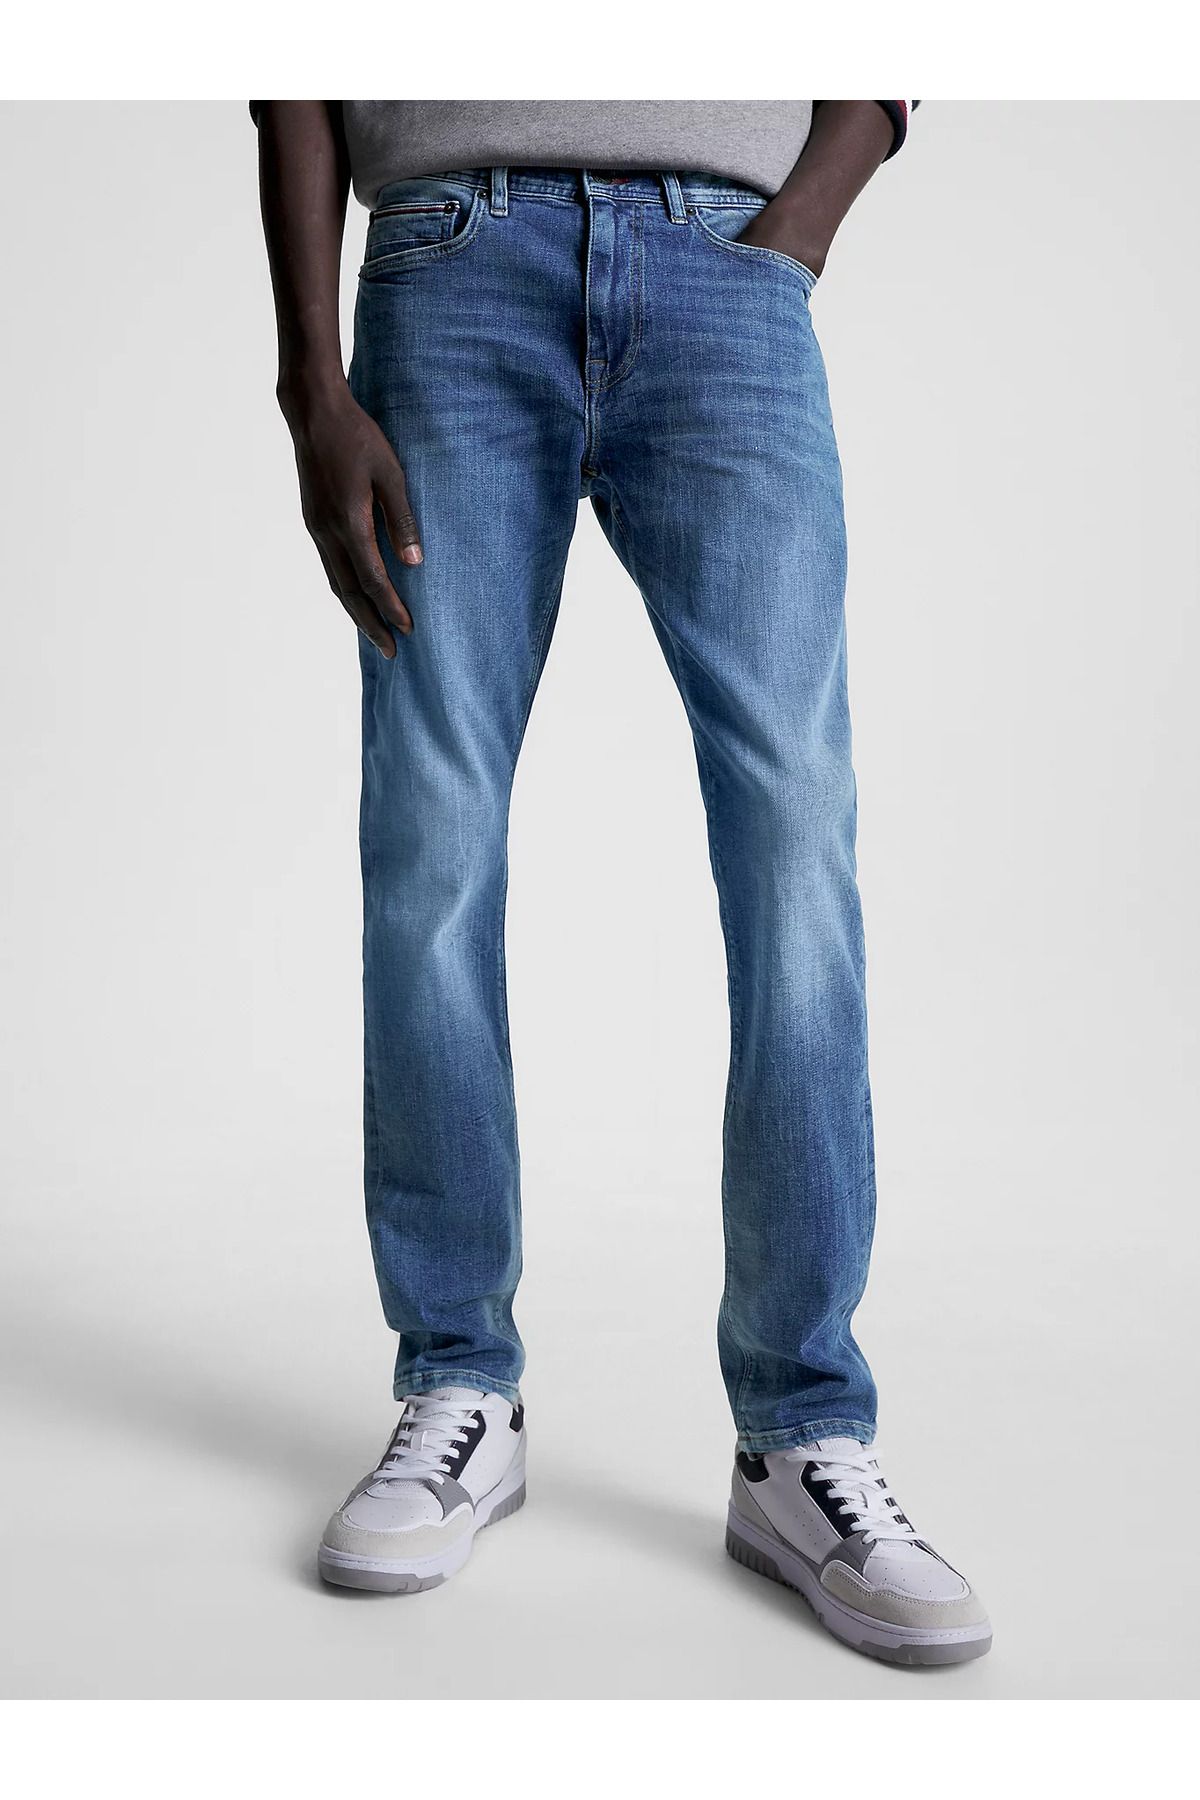 Tommy Hilfiger Erkek Denim Normal Belli Düz Model Günlük Kullanım Mavi Jeans MW0MW32090-1BD